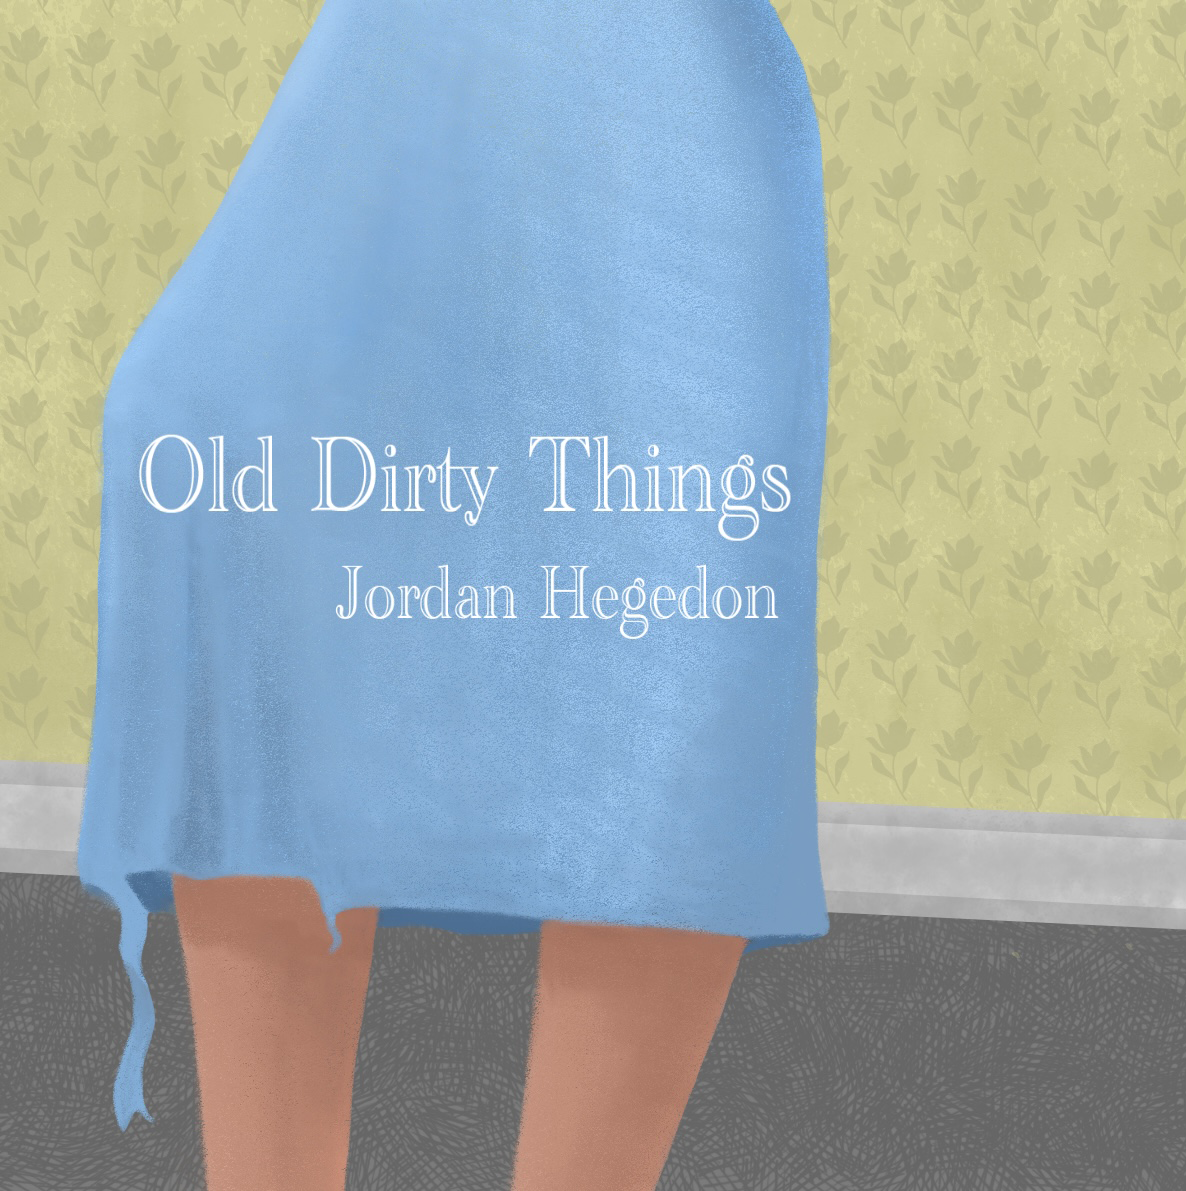 Old Dirty Things by Jordan Hagedon